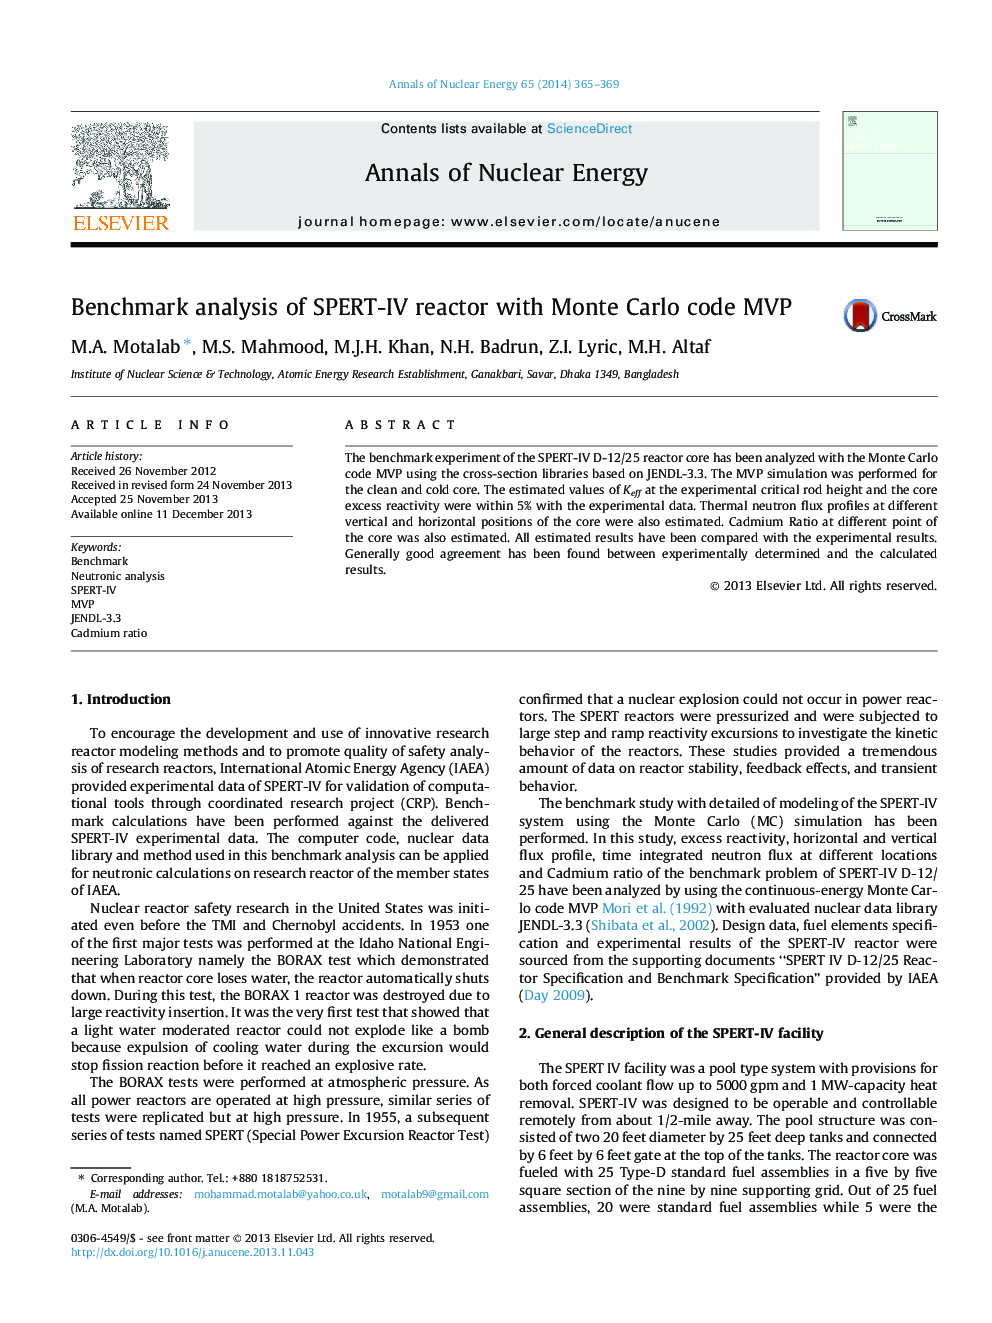 Benchmark analysis of SPERT-IV reactor with Monte Carlo code MVP